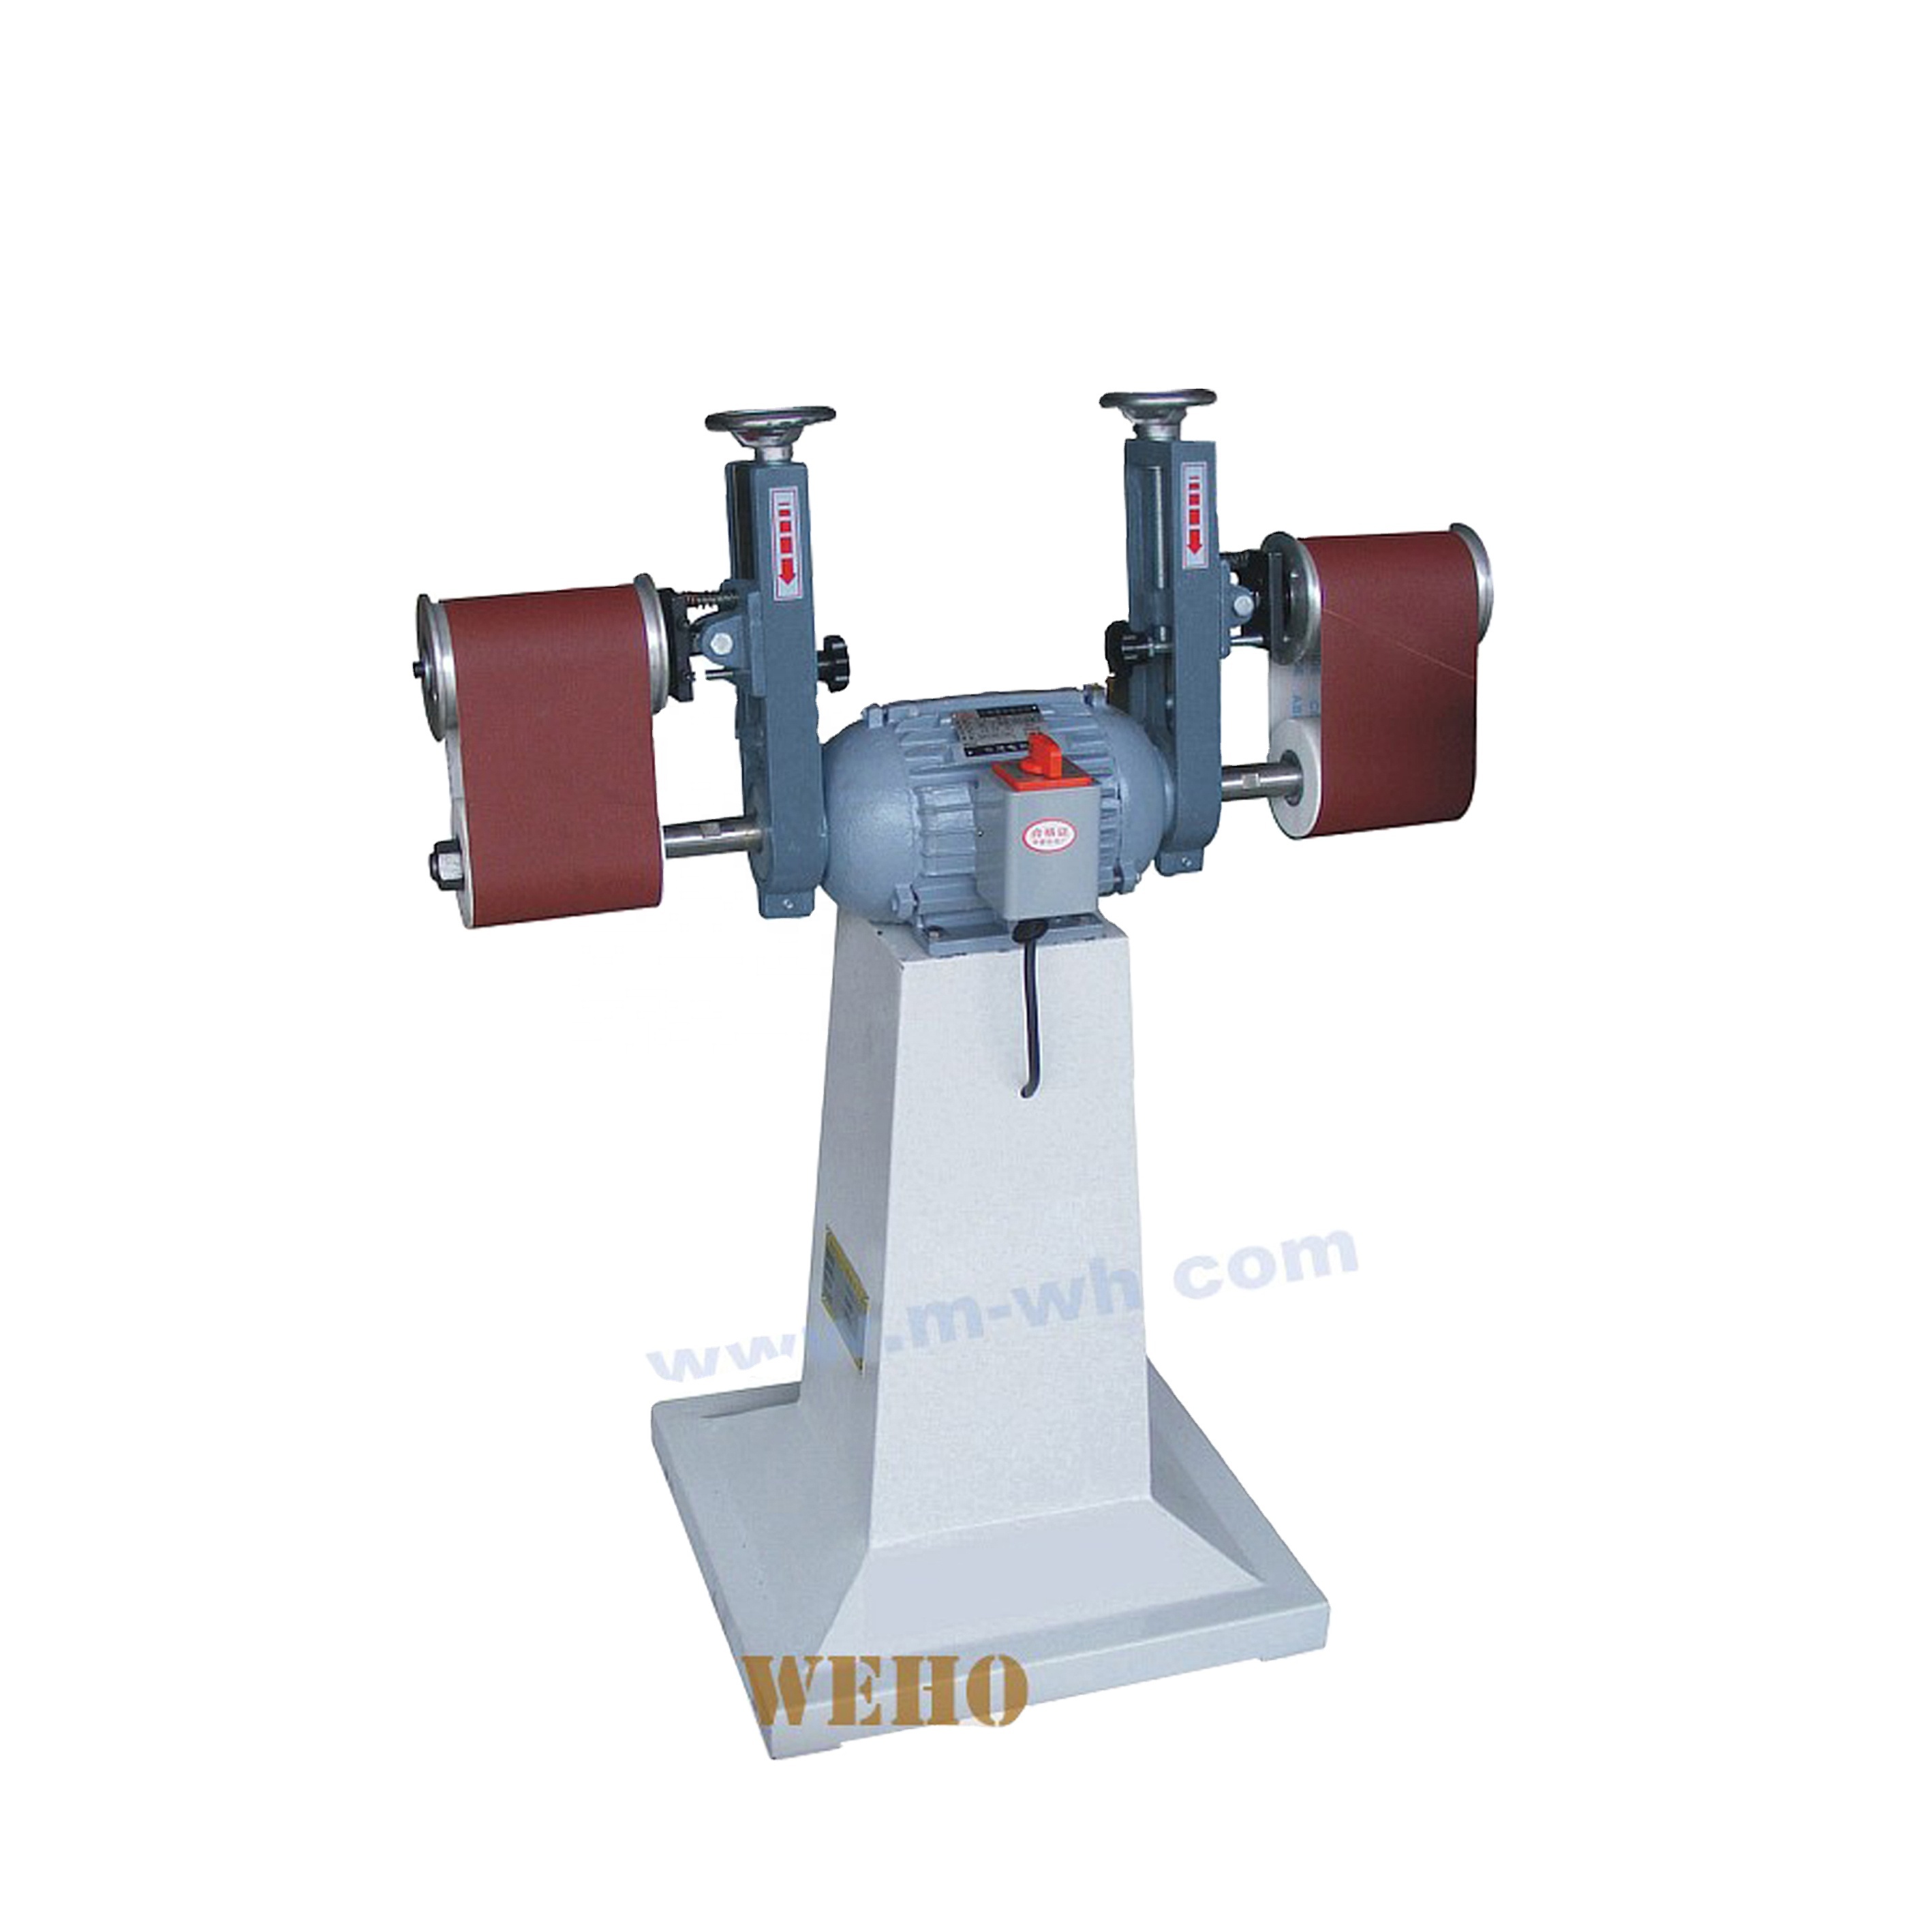 Vertical Oscillating Spindle Sander machine MW2415